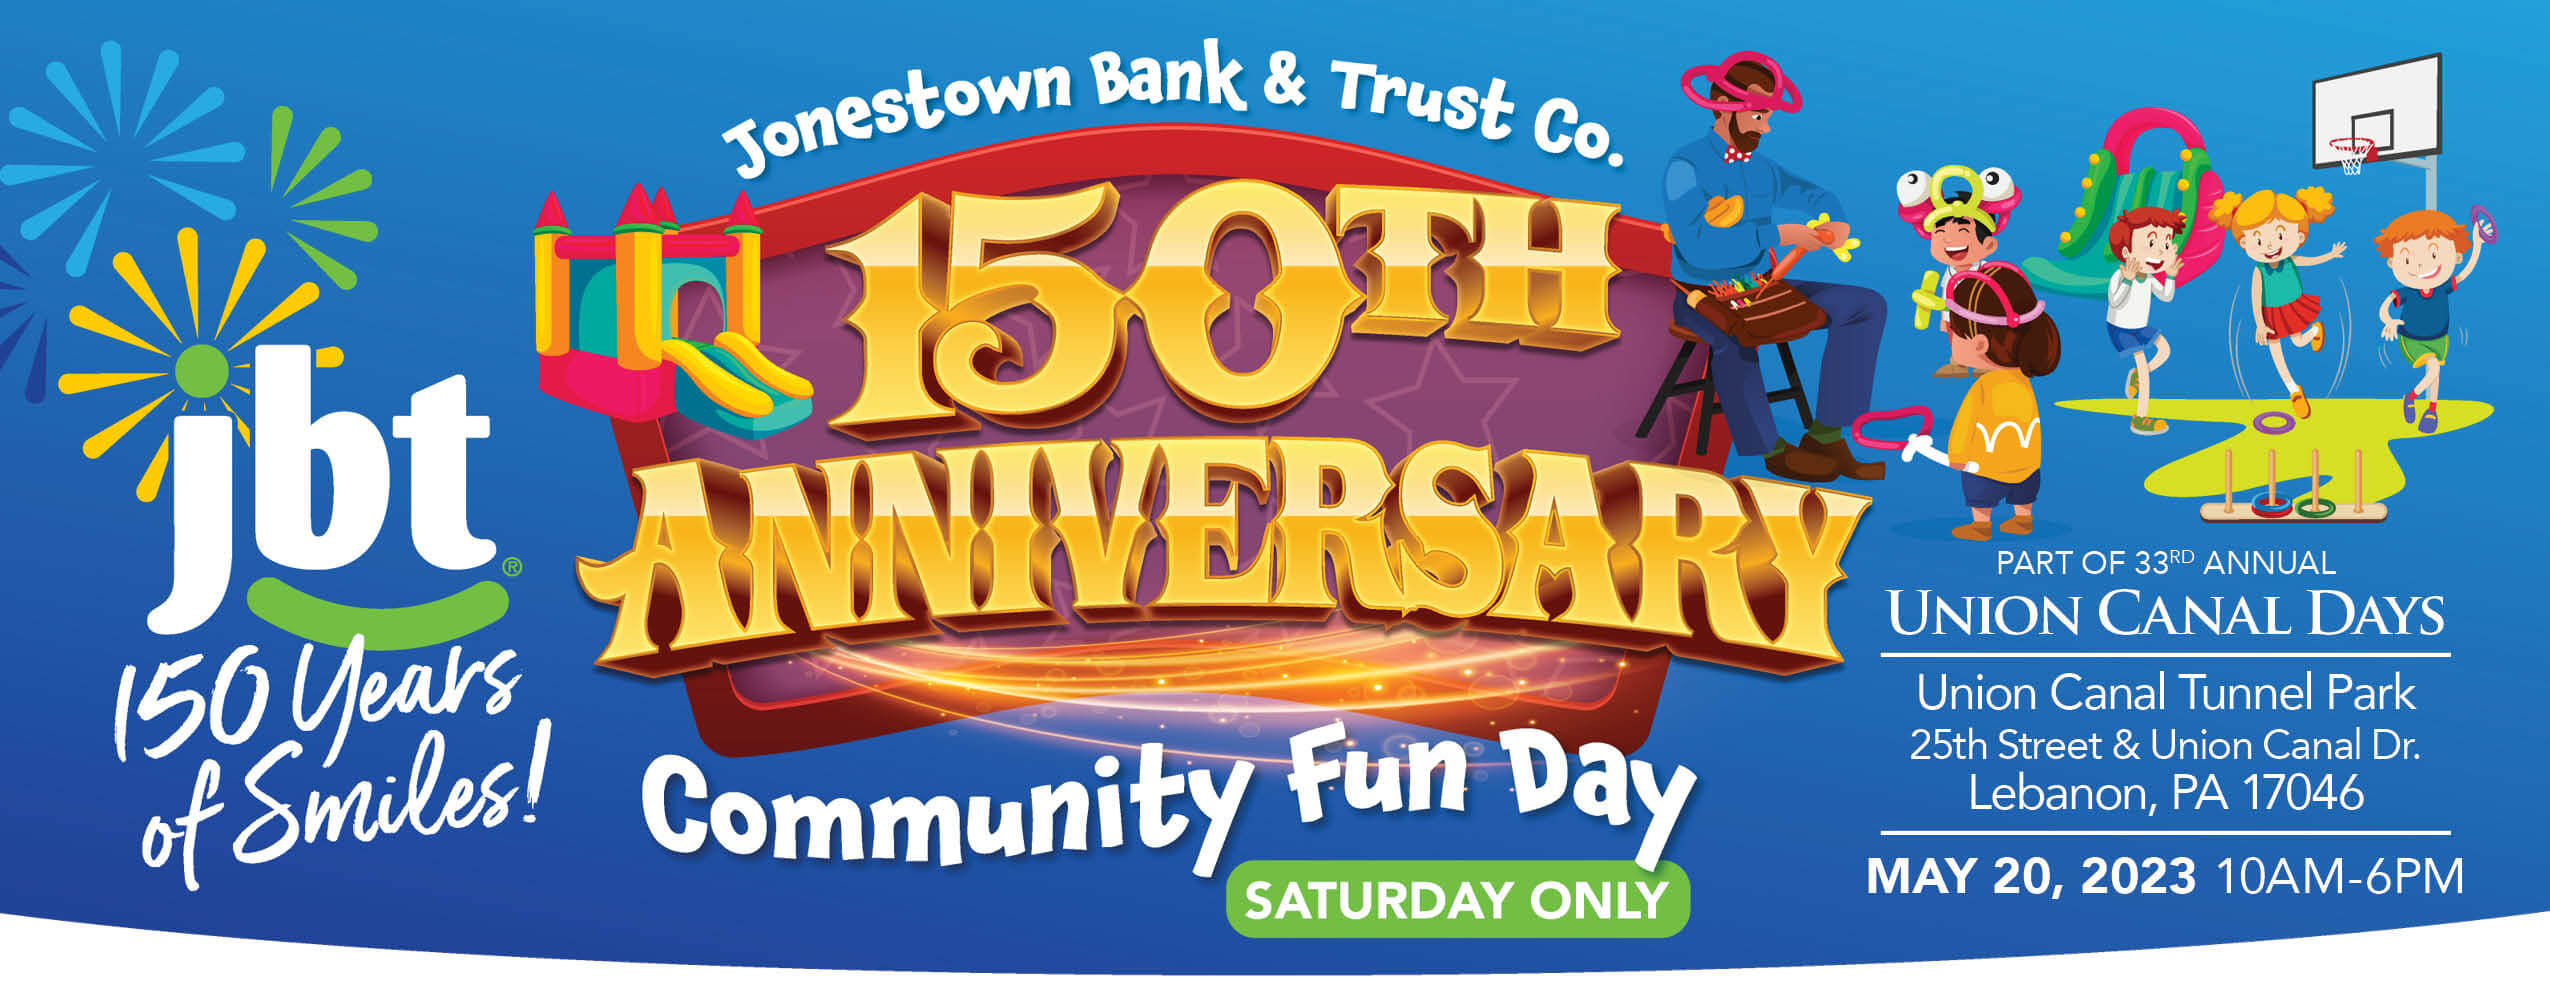 JBT 150th Anniversary Community Fun Day